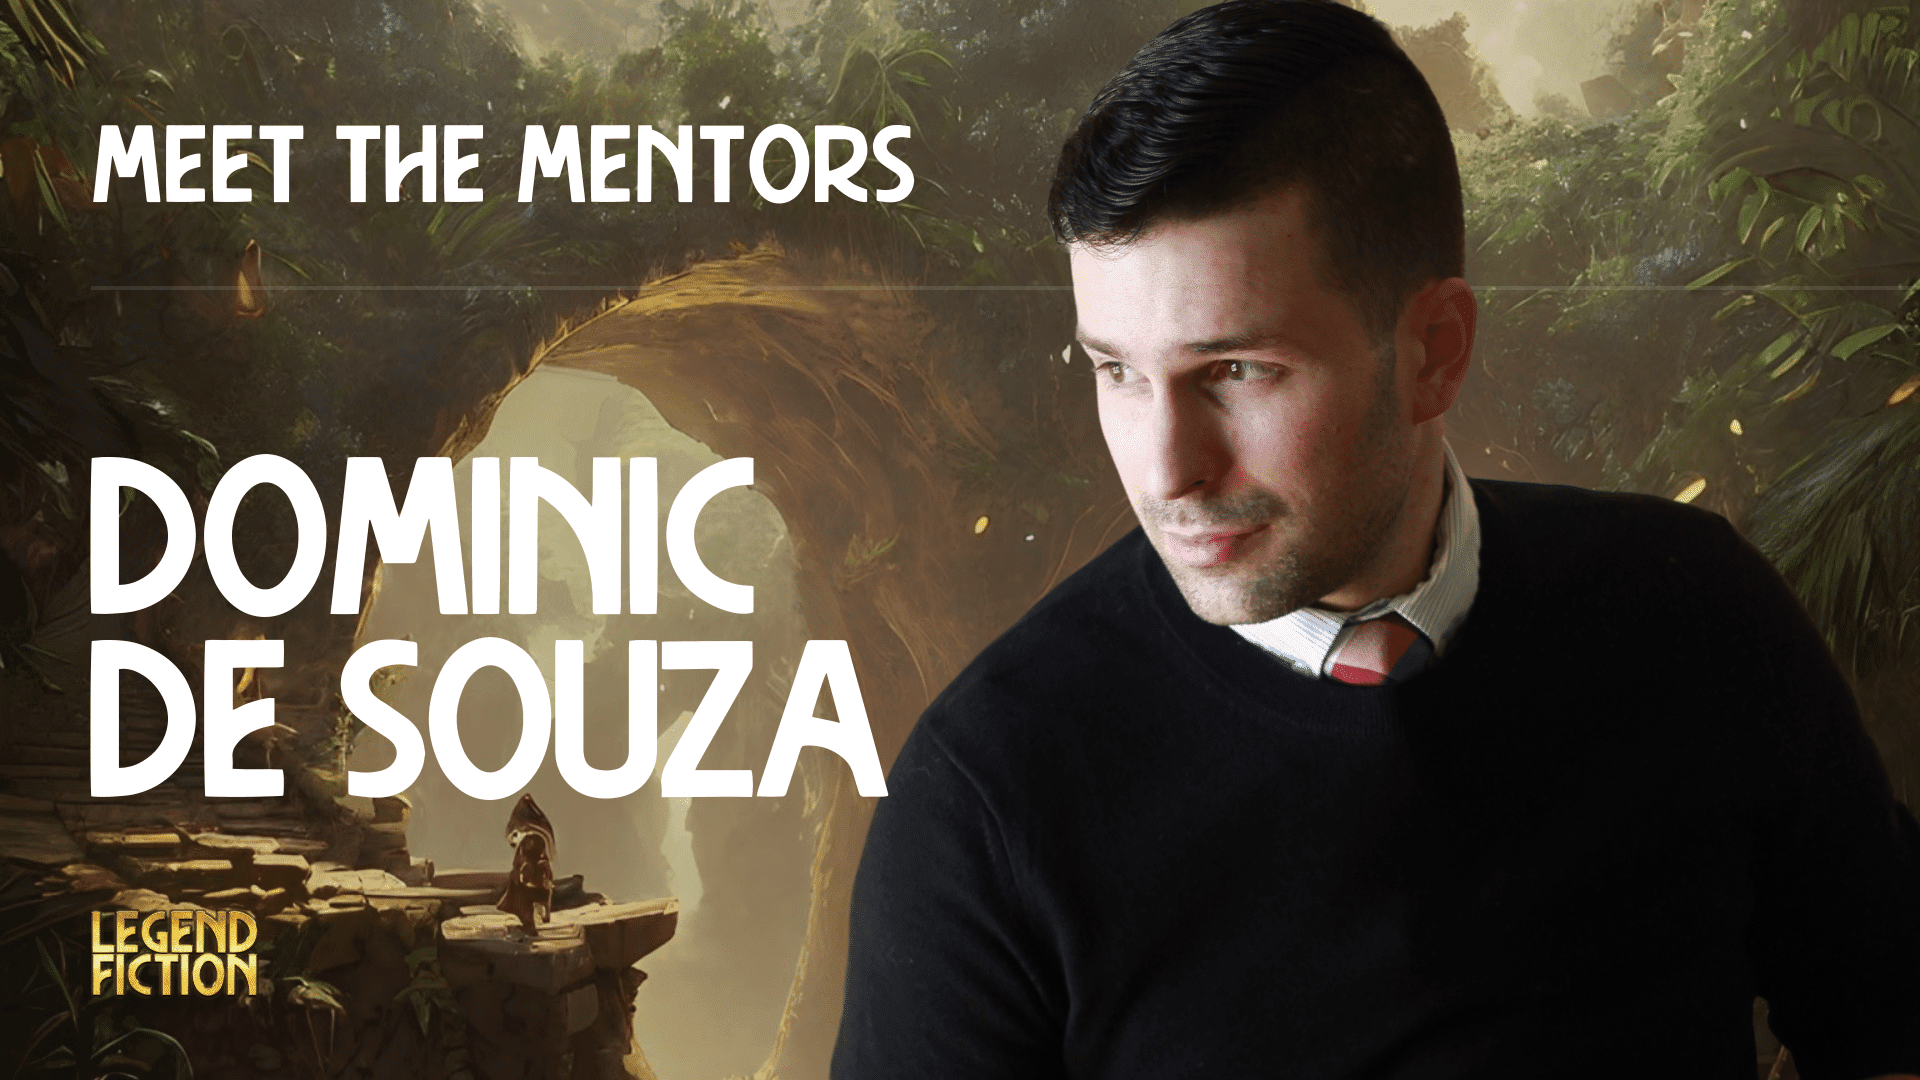 Dominic de Souza | LegendFiction Founder & Mentor